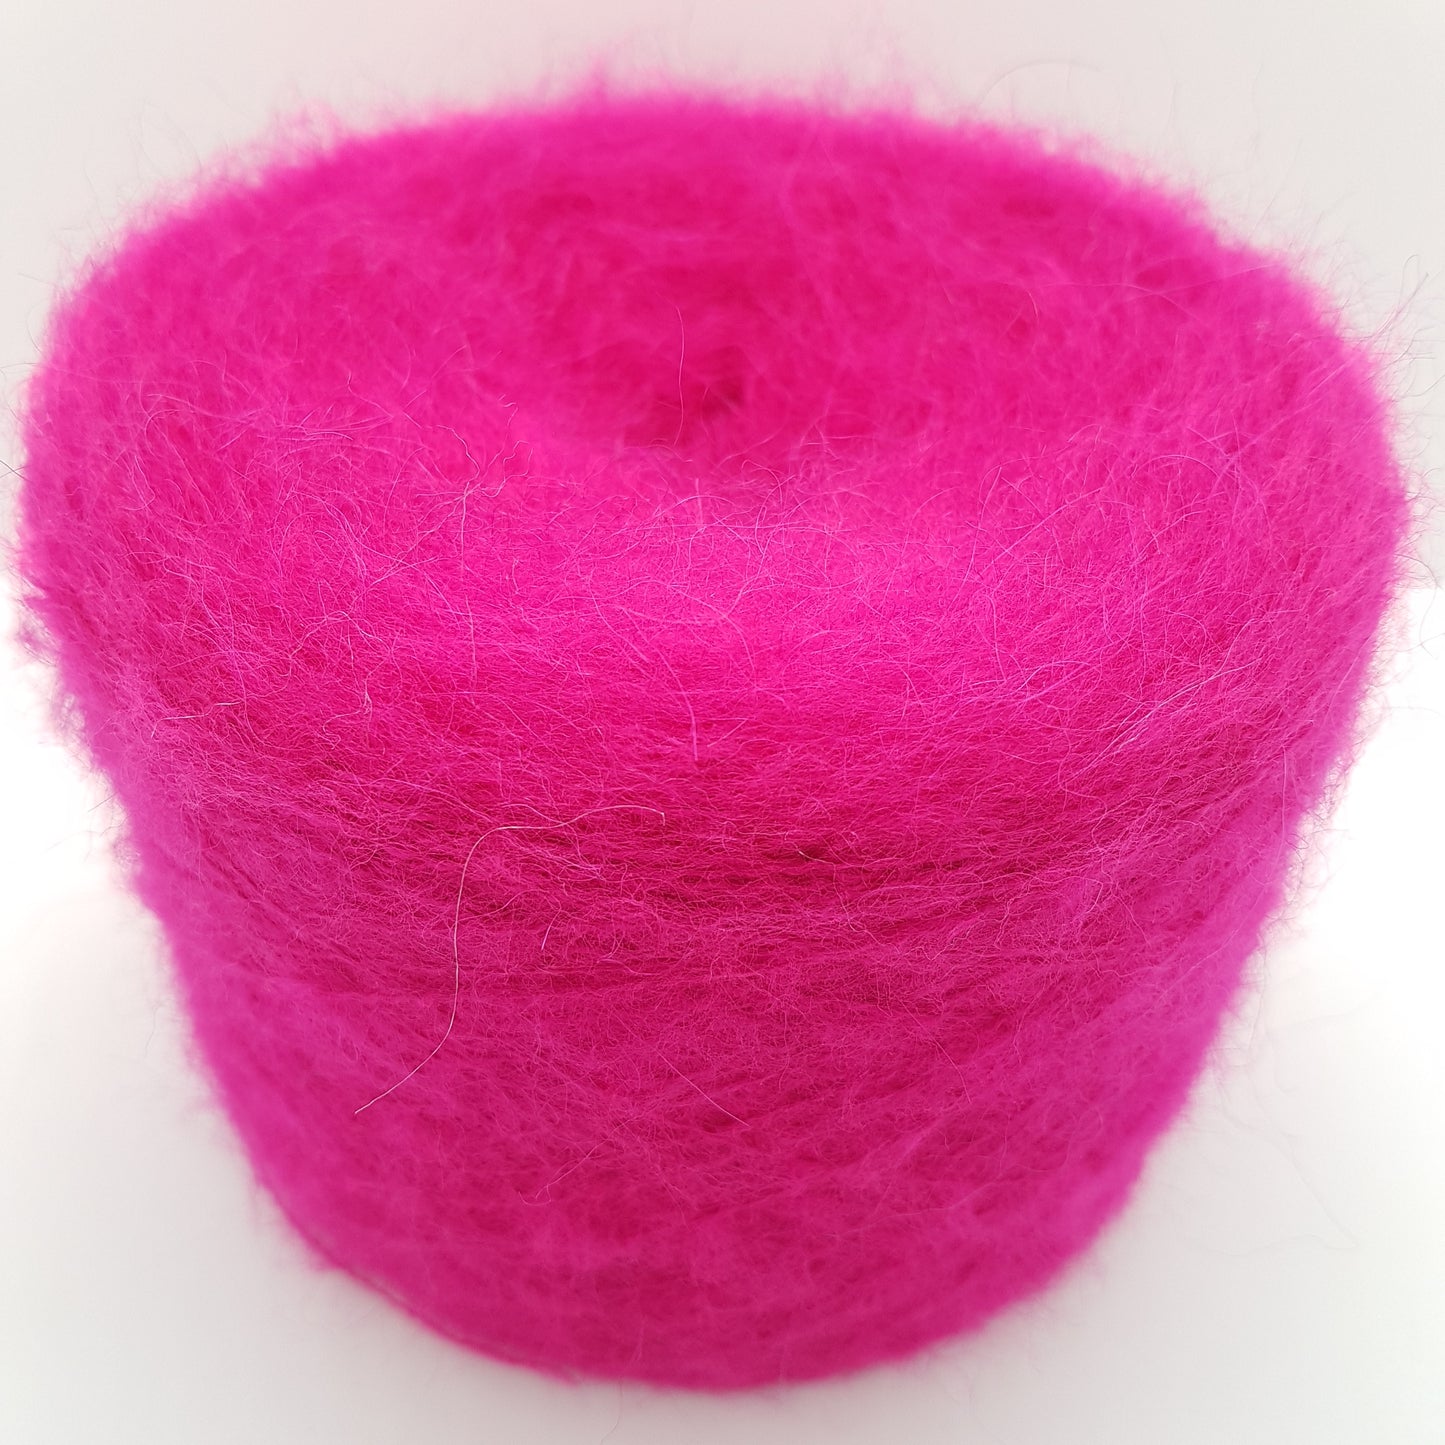 100g Alpaca Alpaca combed brushed soft Italian yarn fuchsia color N.228